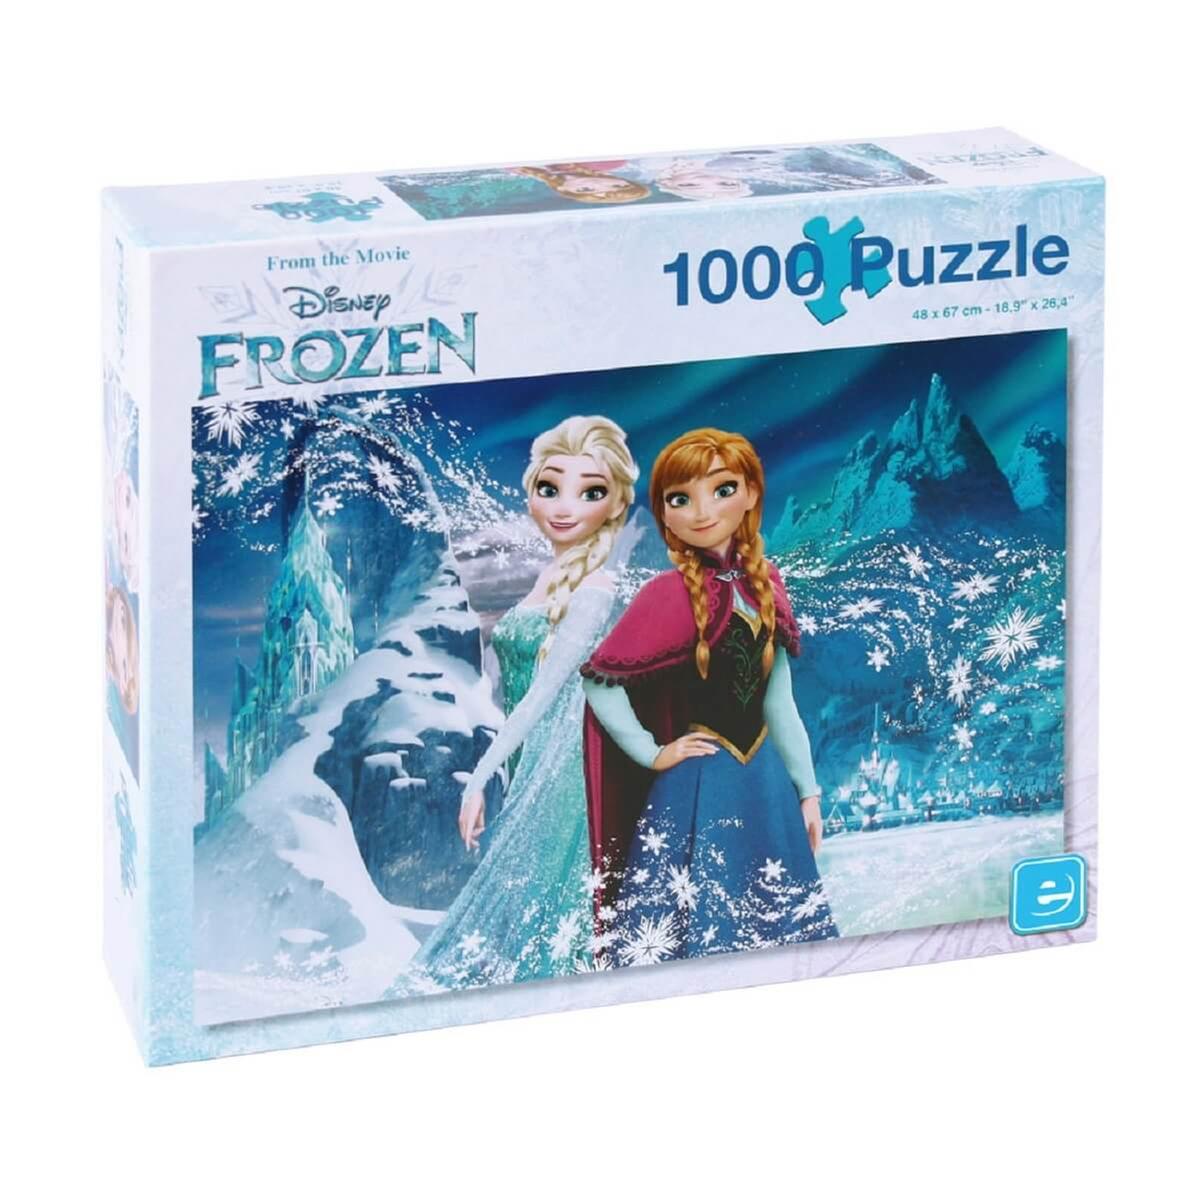 Comprar Jogos e Puzzles de Frozen online, envios gratis desde 49€, em 24h